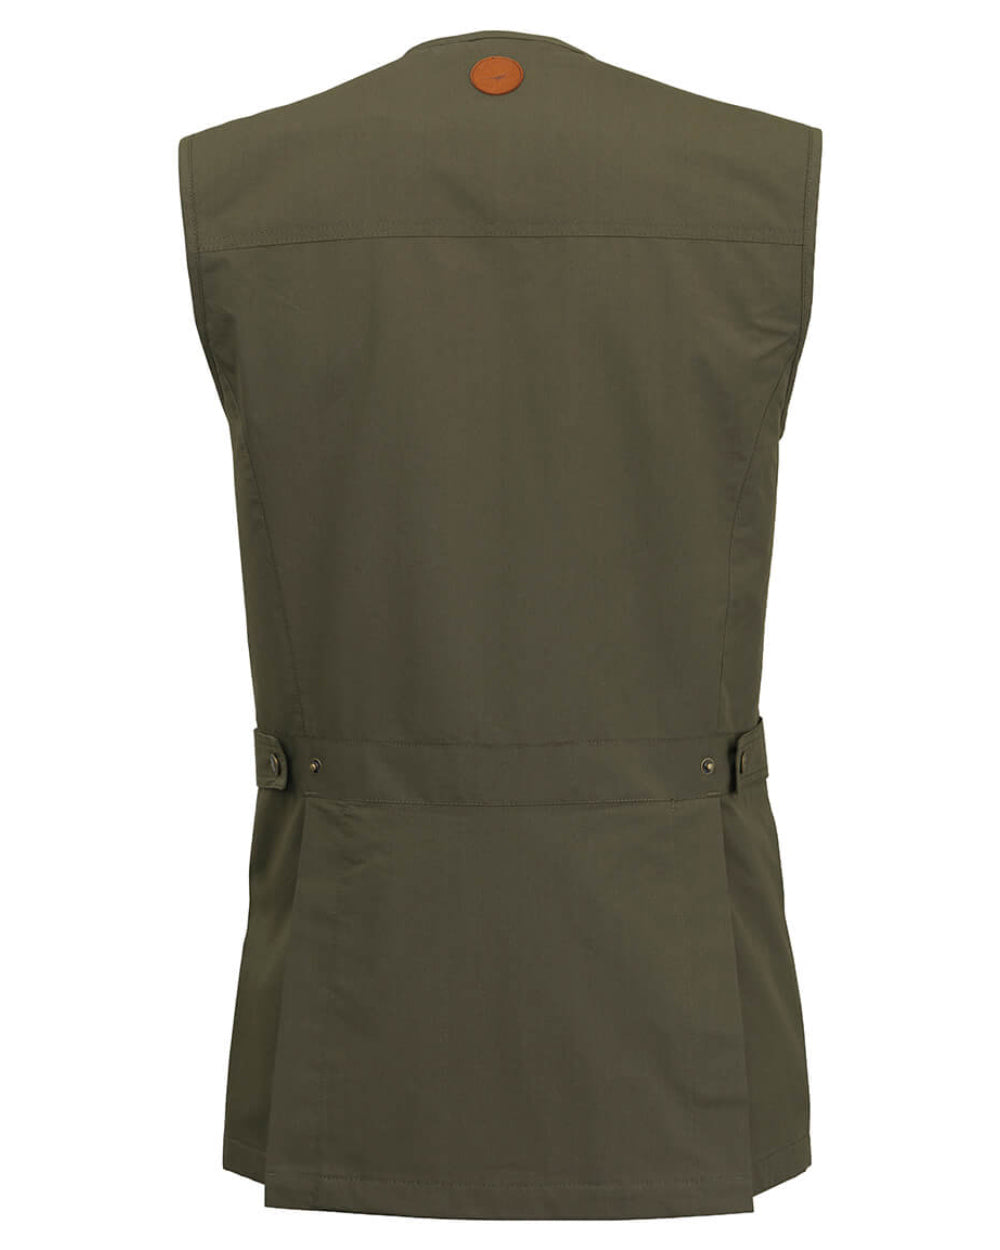 Olive Coloured Laksen Marsh Shooting Vest On A White Background